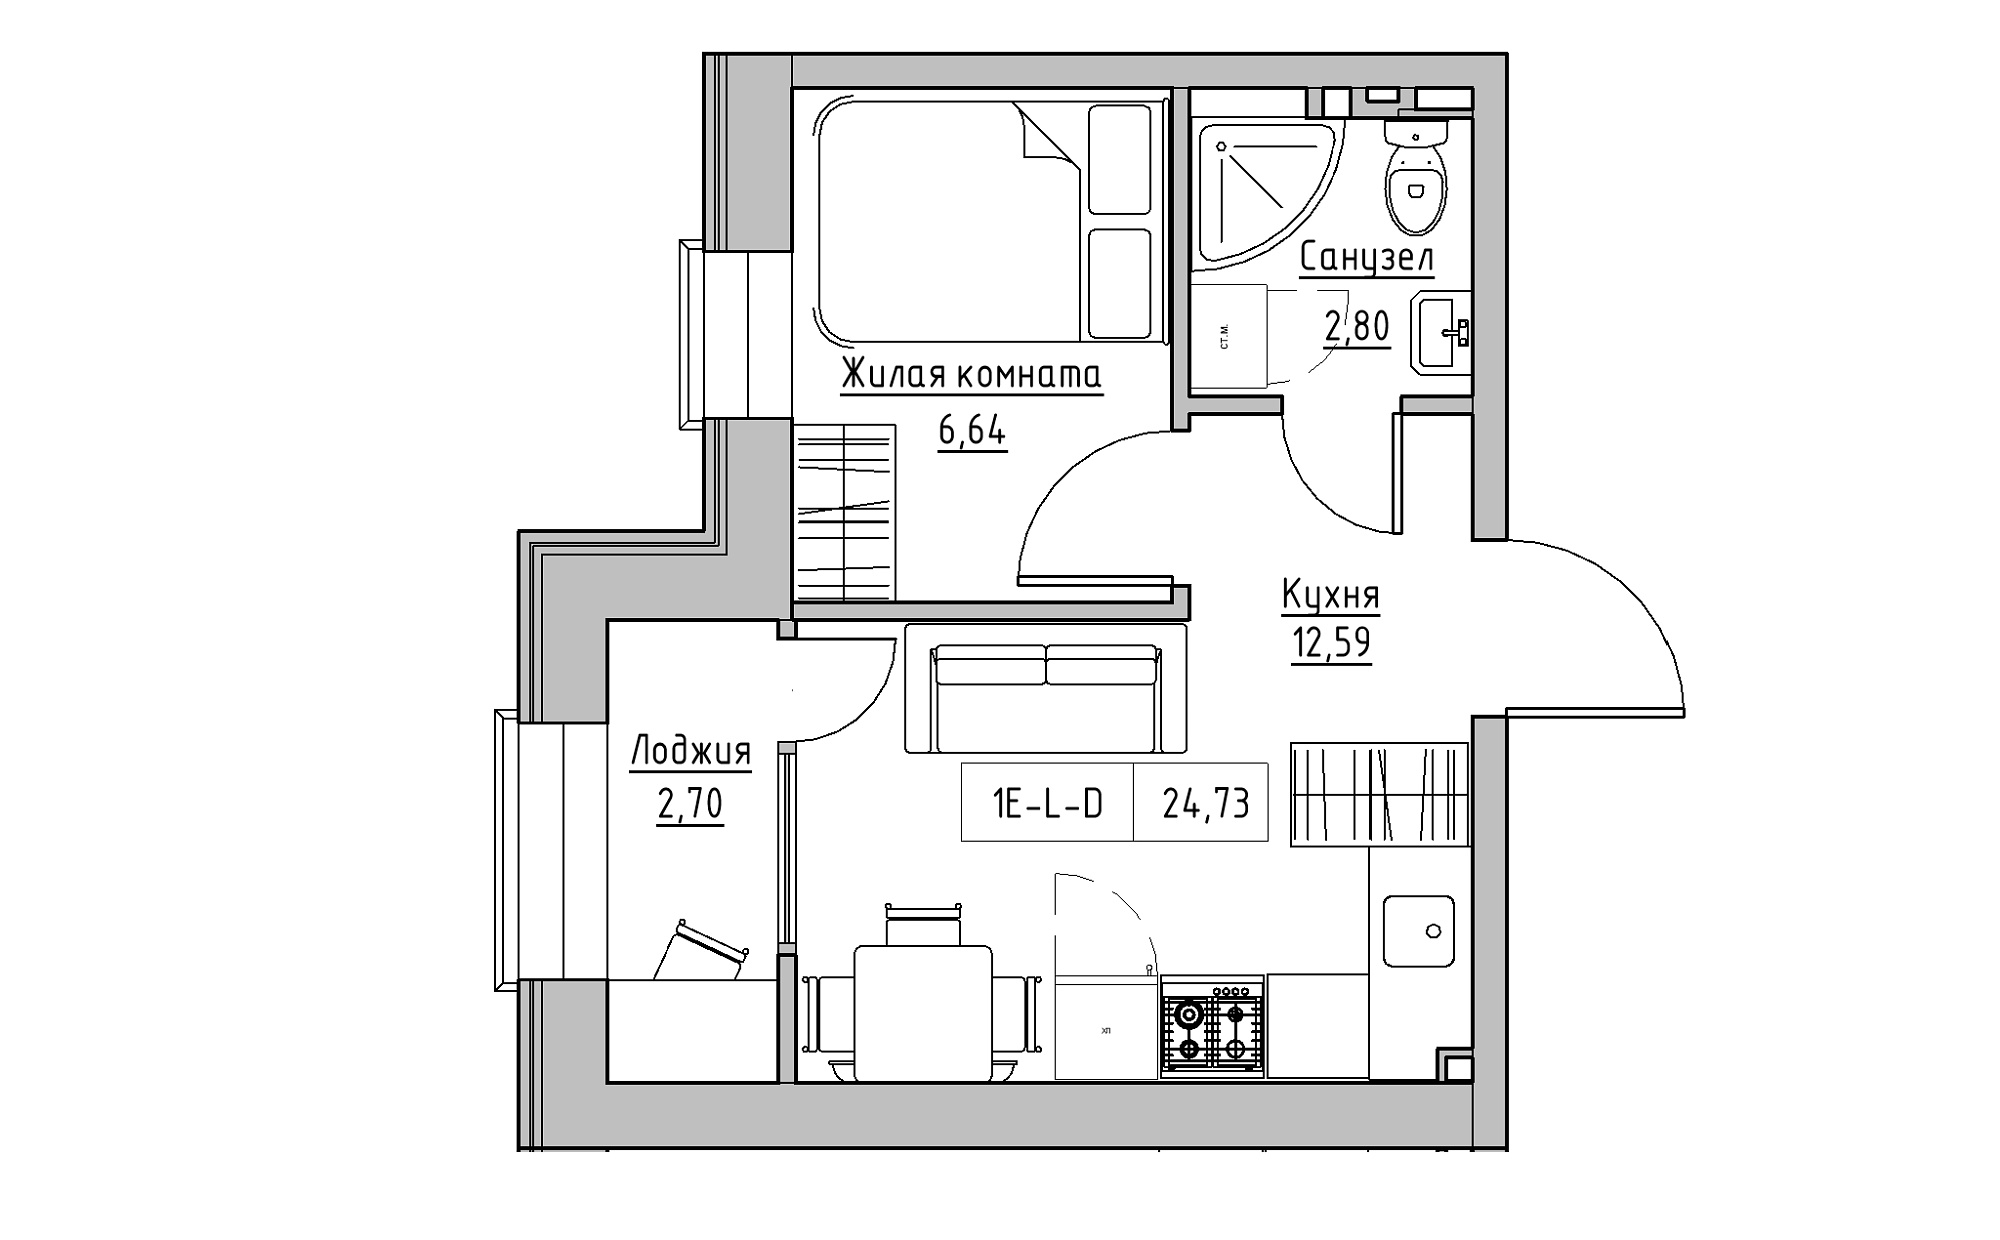 Planning 1-rm flats area 24.73m2, KS-022-02/0013.